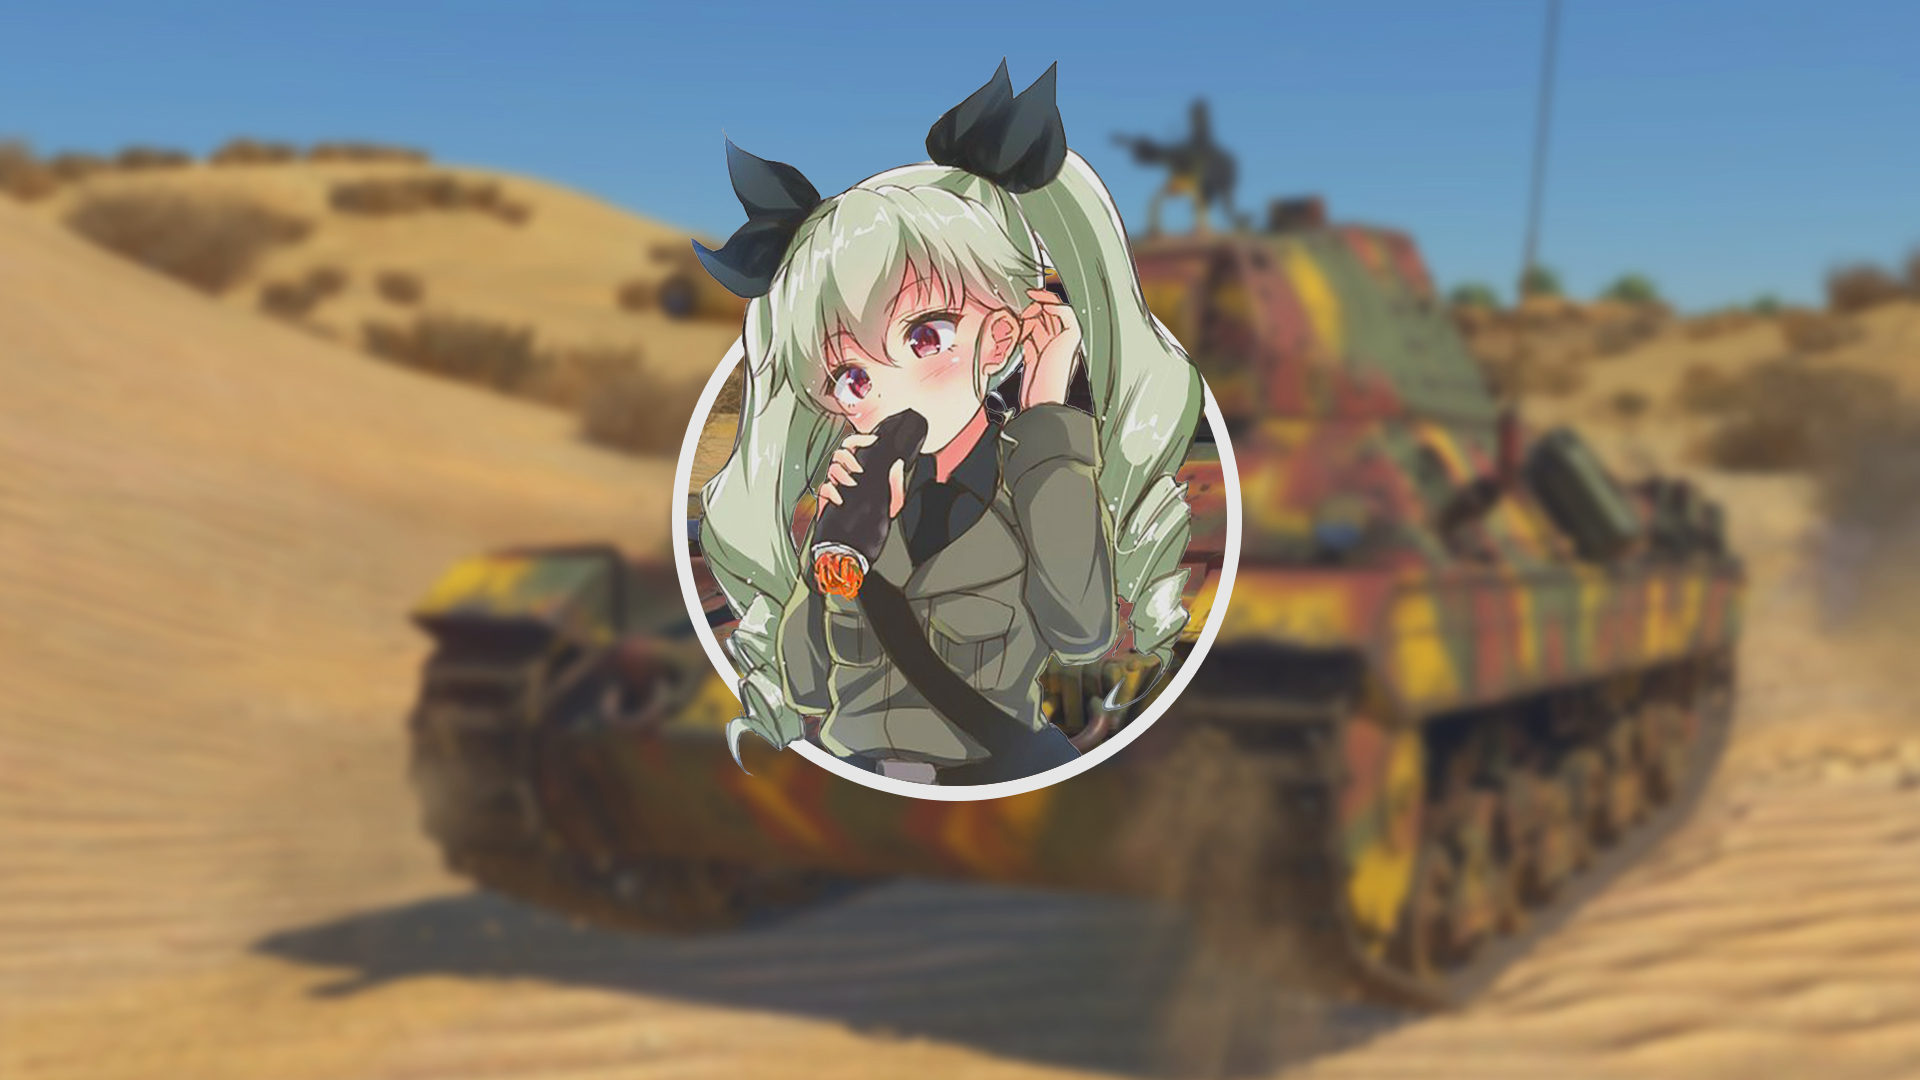 Anime 1920x1080 anime anime girls Girls und Panzer Anchovy (Girls und Panzer) suggestive phallic symbol picture-in-picture